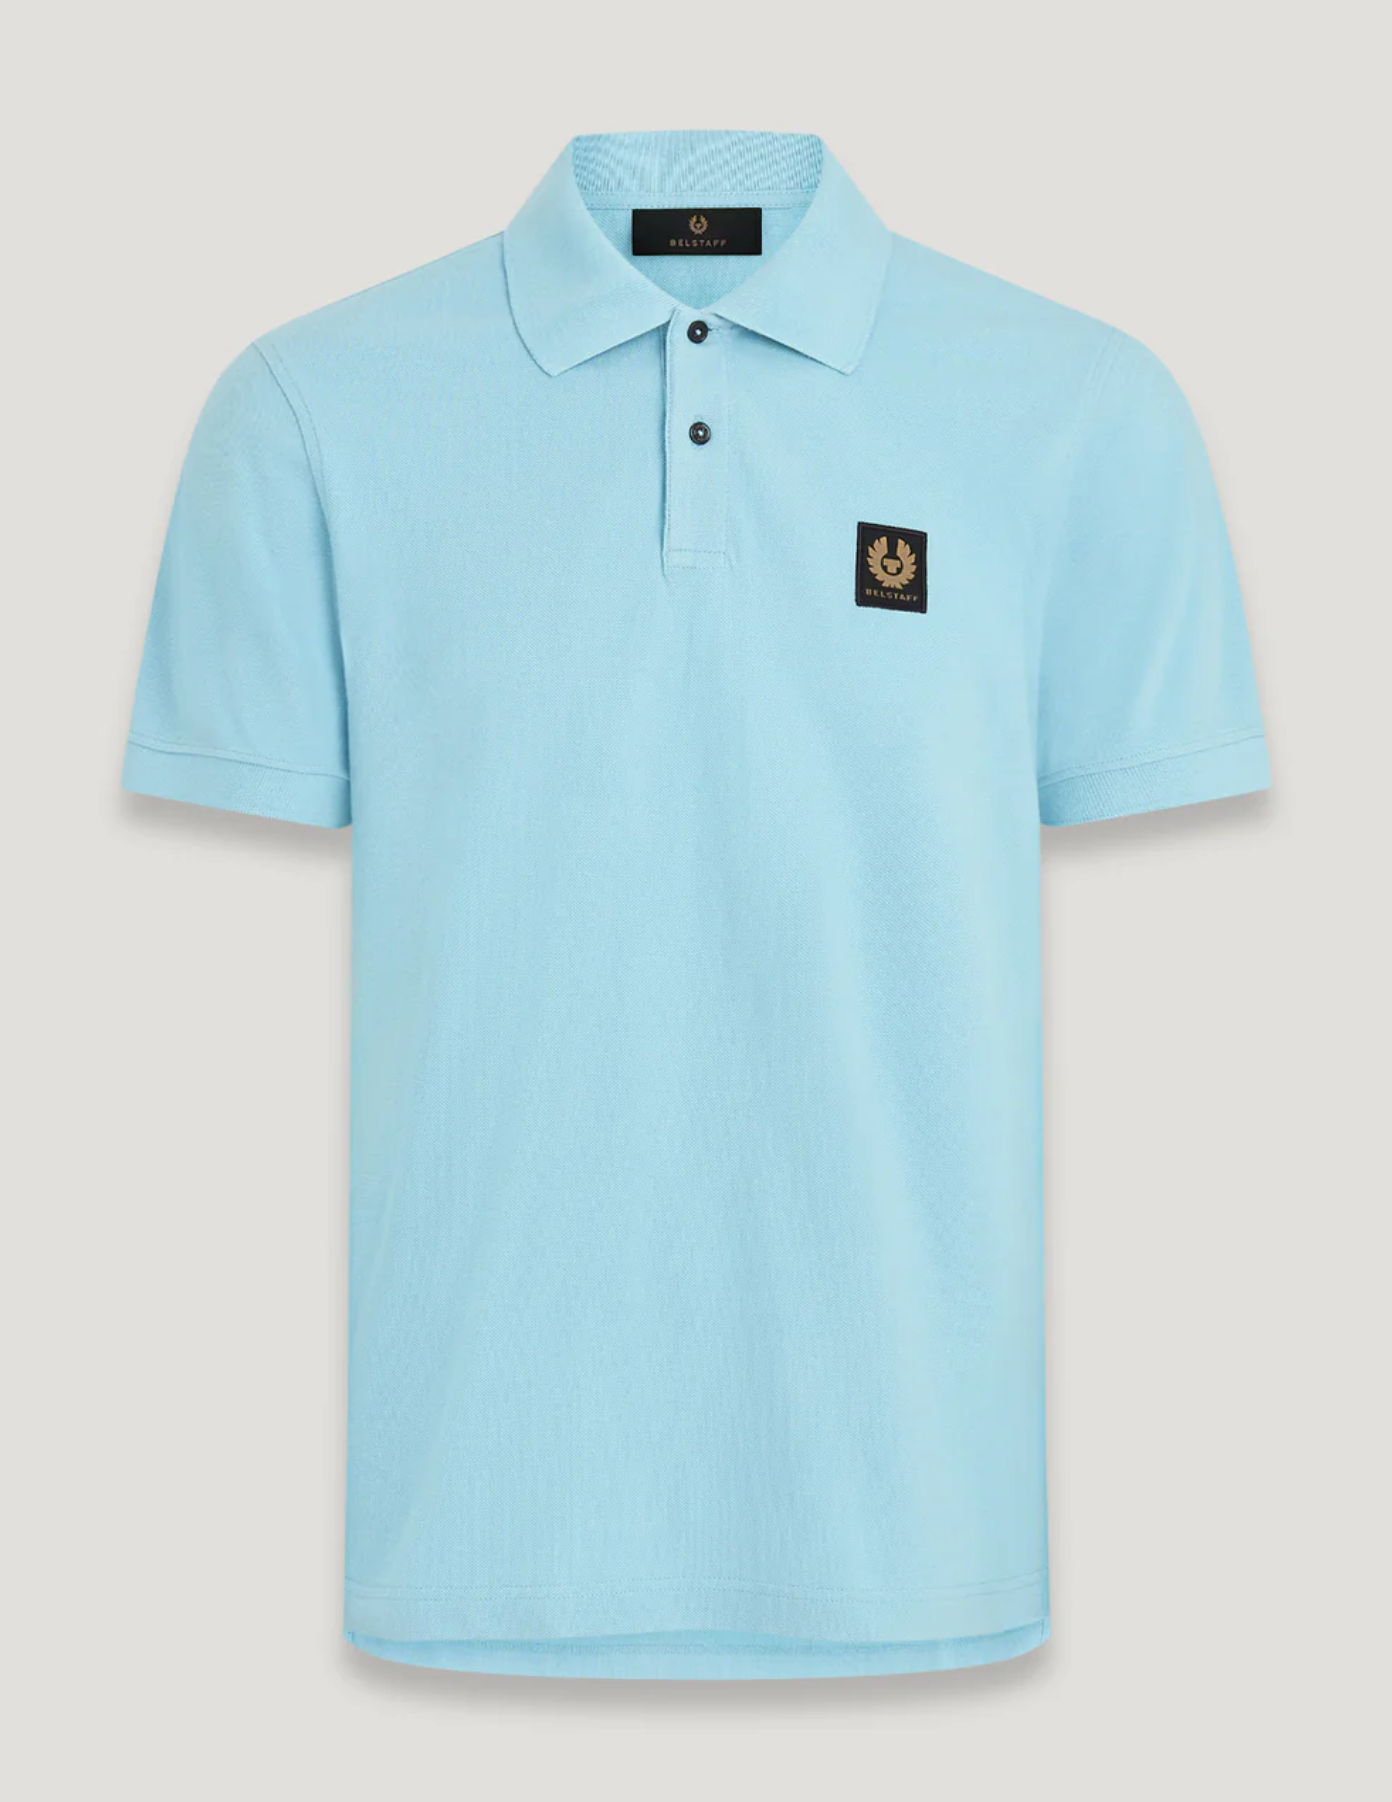 Belstaff S/S Pique Polo Shirt Skyline Blue